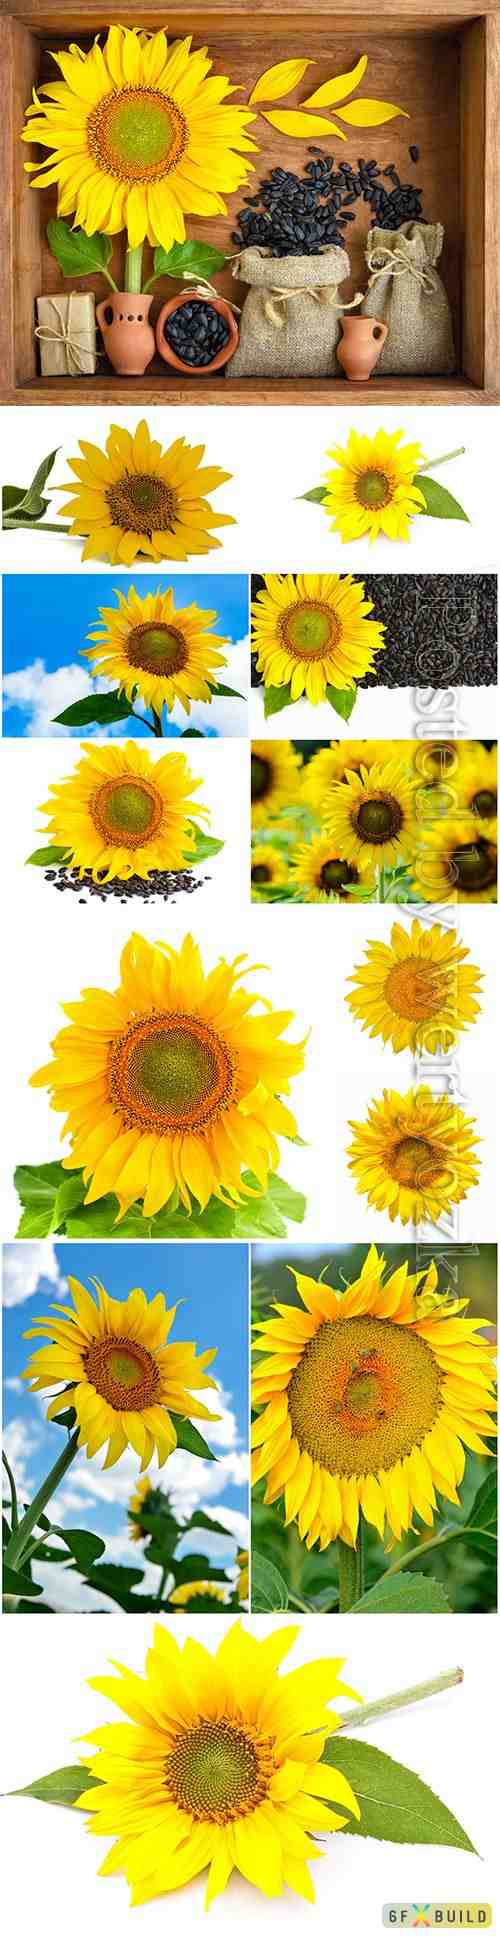 Beautiful sunflowers stock photo